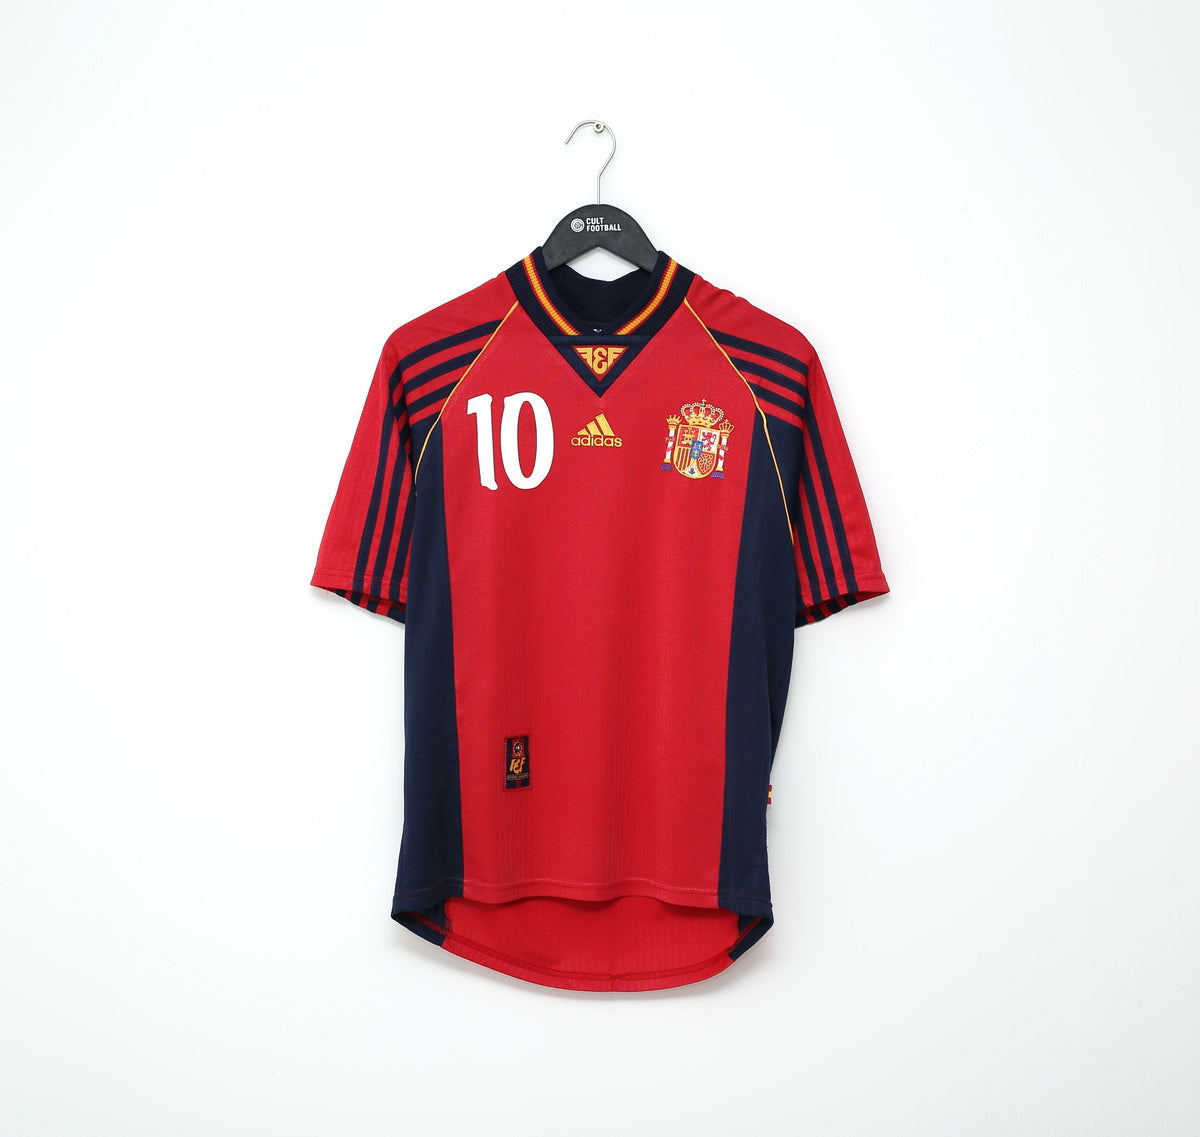 Spain Football Clothing, Basketball Soccer Tees